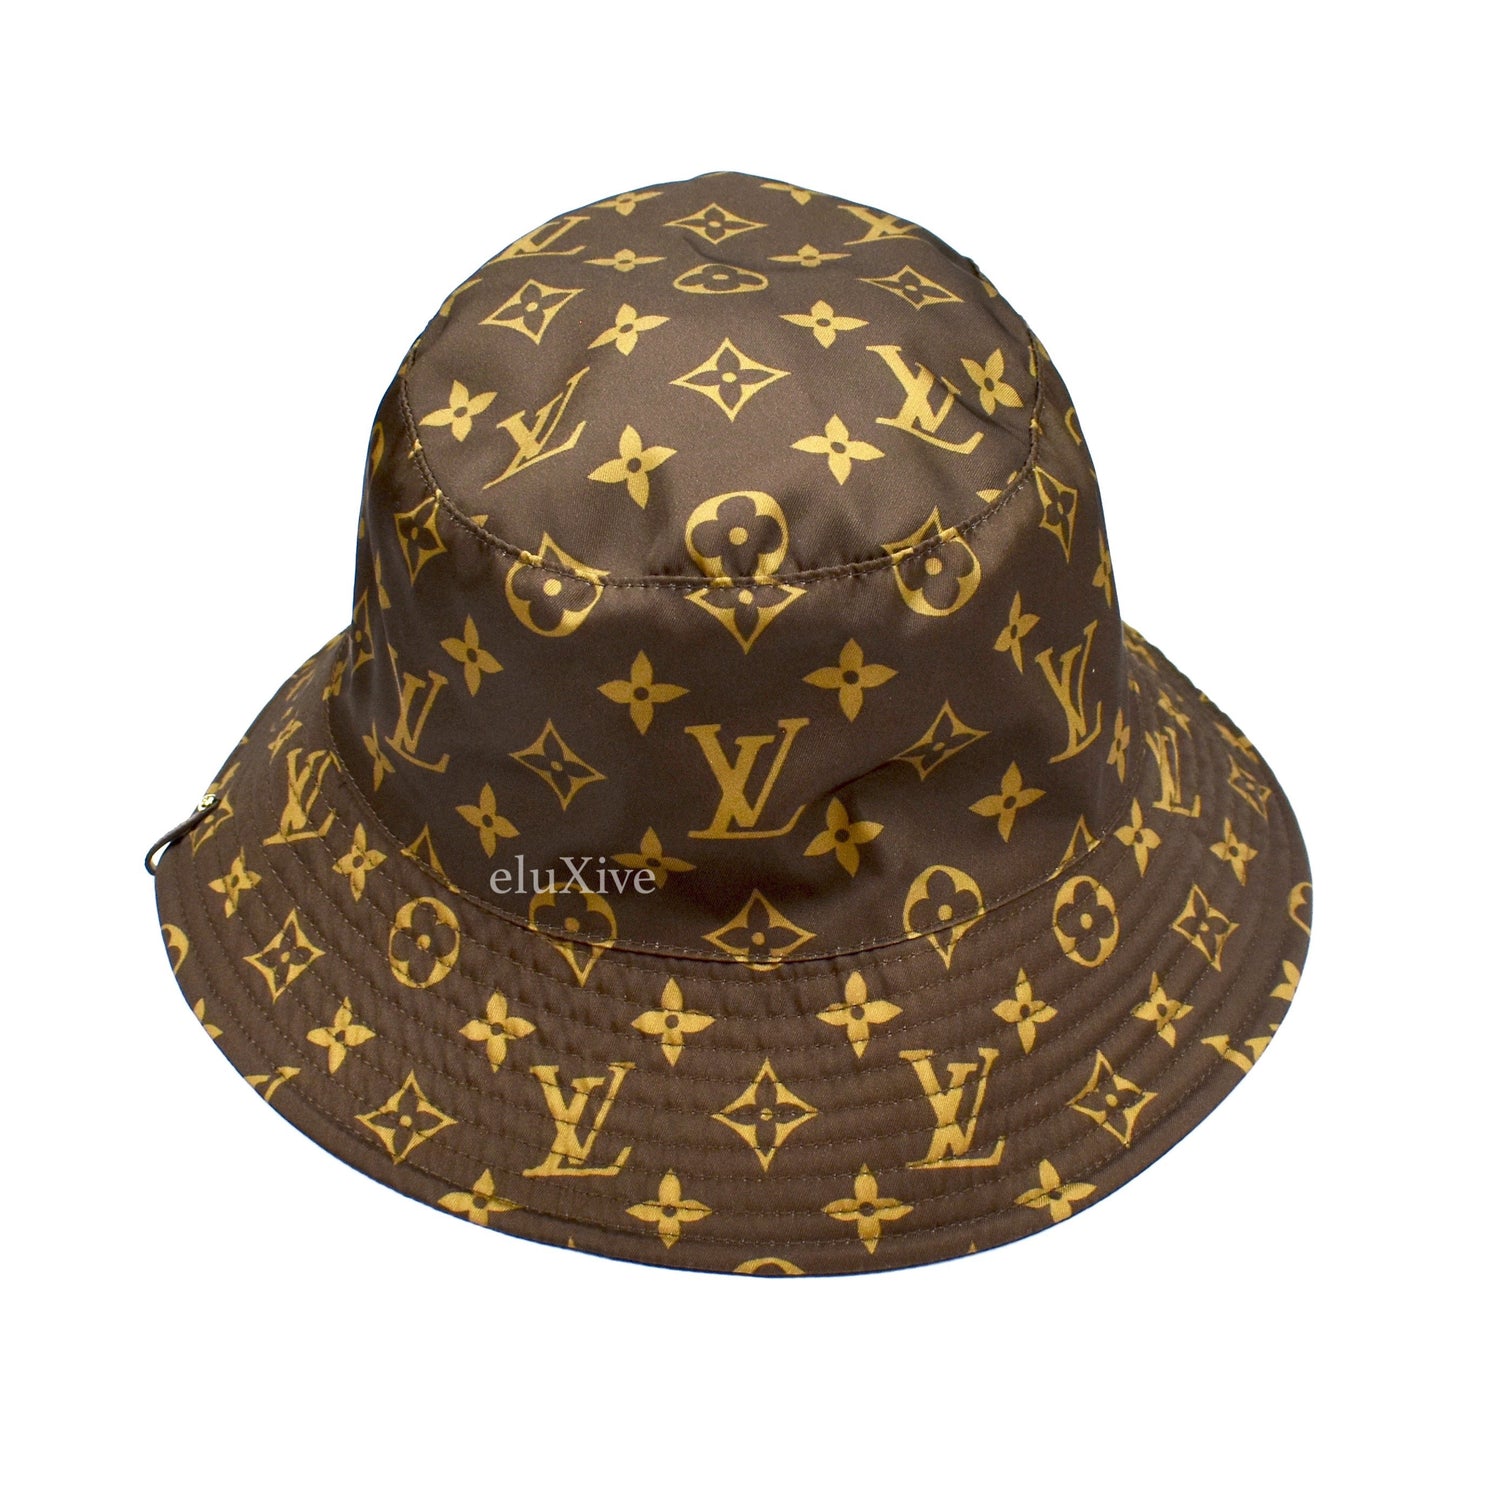 Leather Louis Vuitton bucket hat #designer #mint